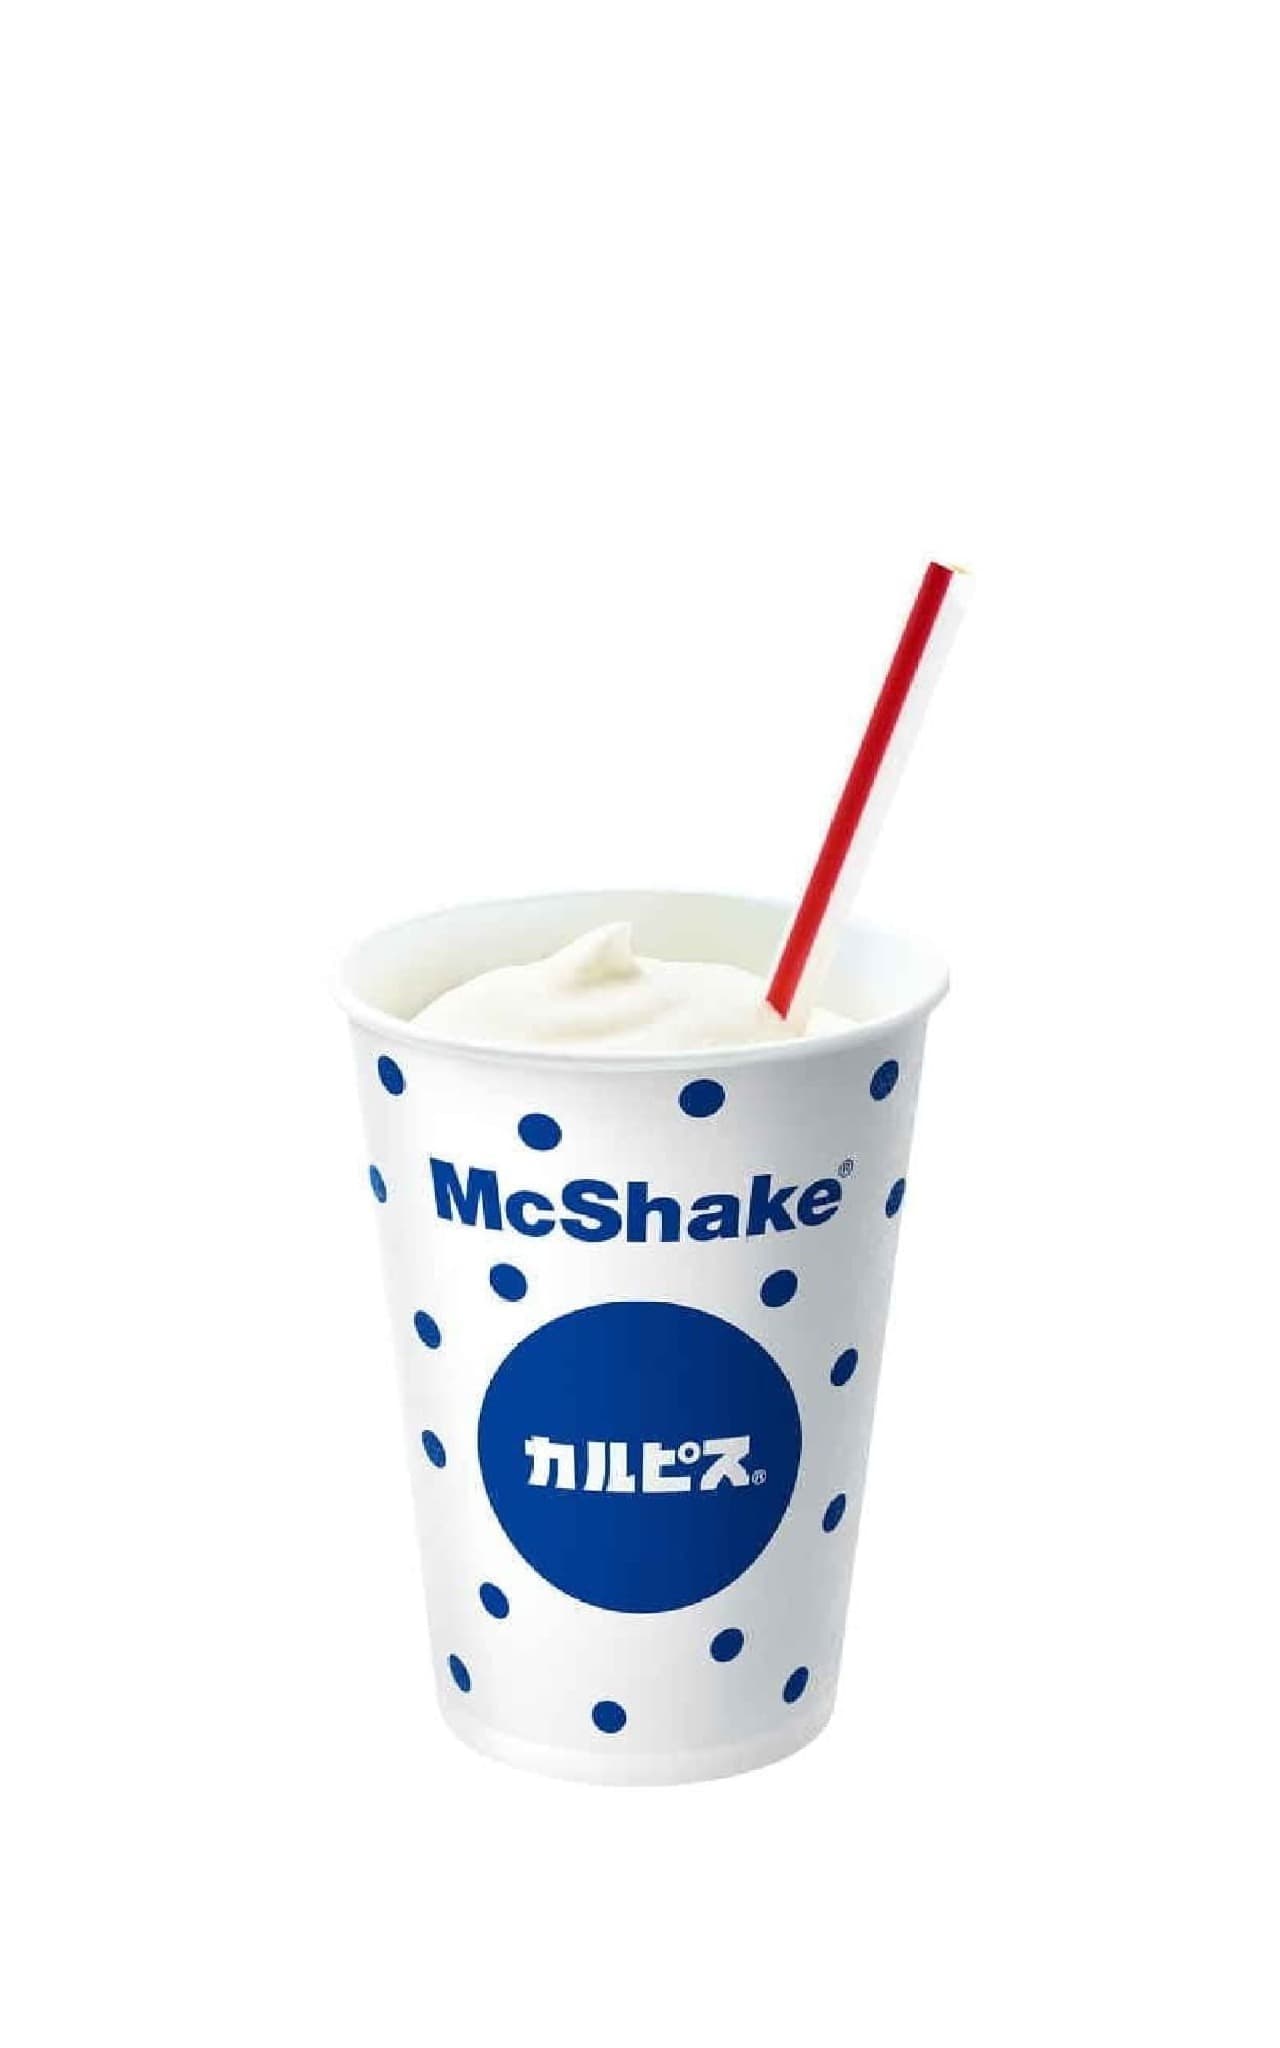 McDonald's "McShake Calpis".